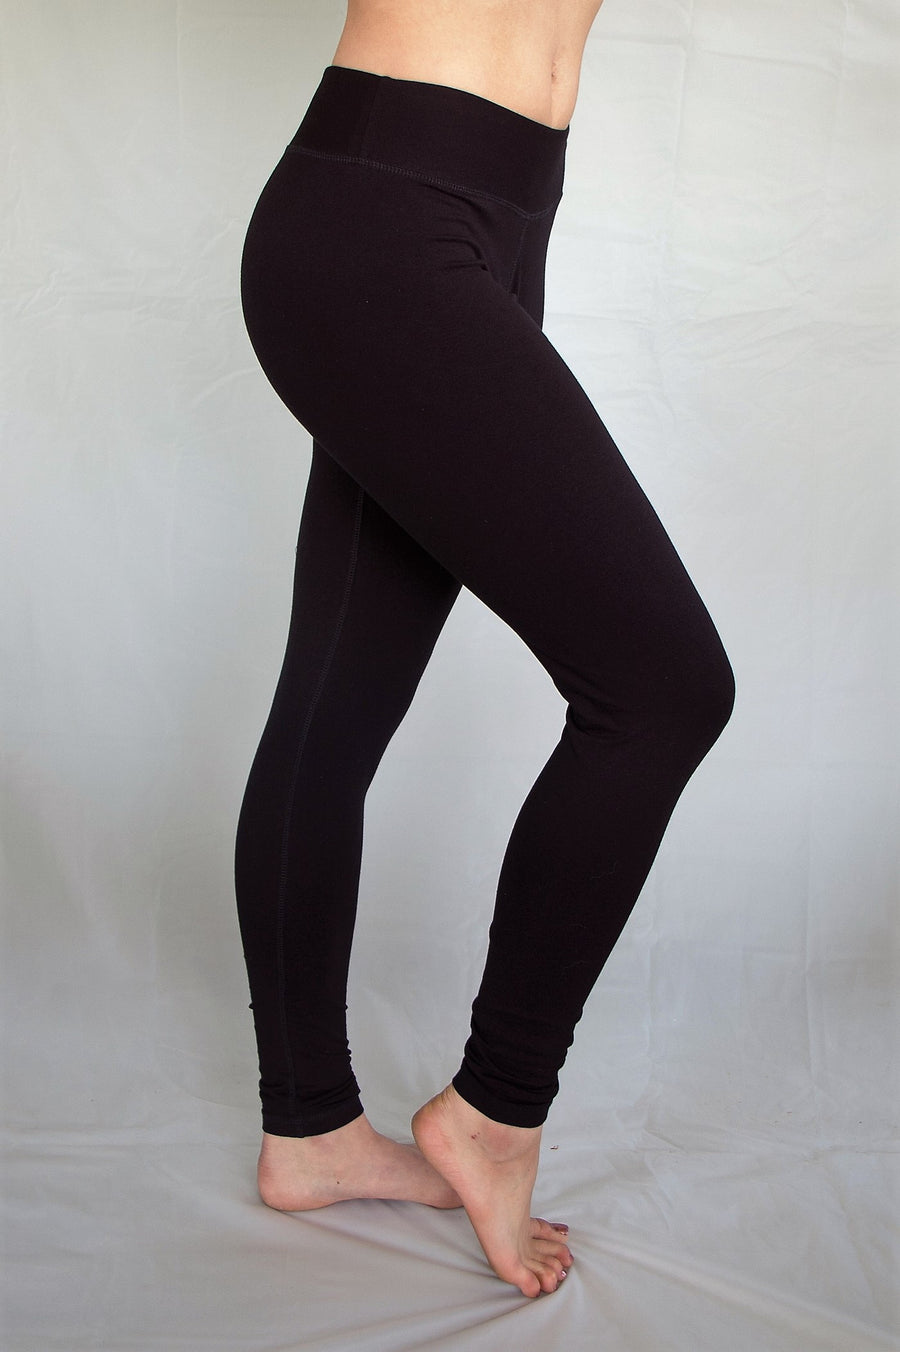 Yogipace,5 Pockets,Extra Tall Women's 36 Extra Long Yoga Leggings